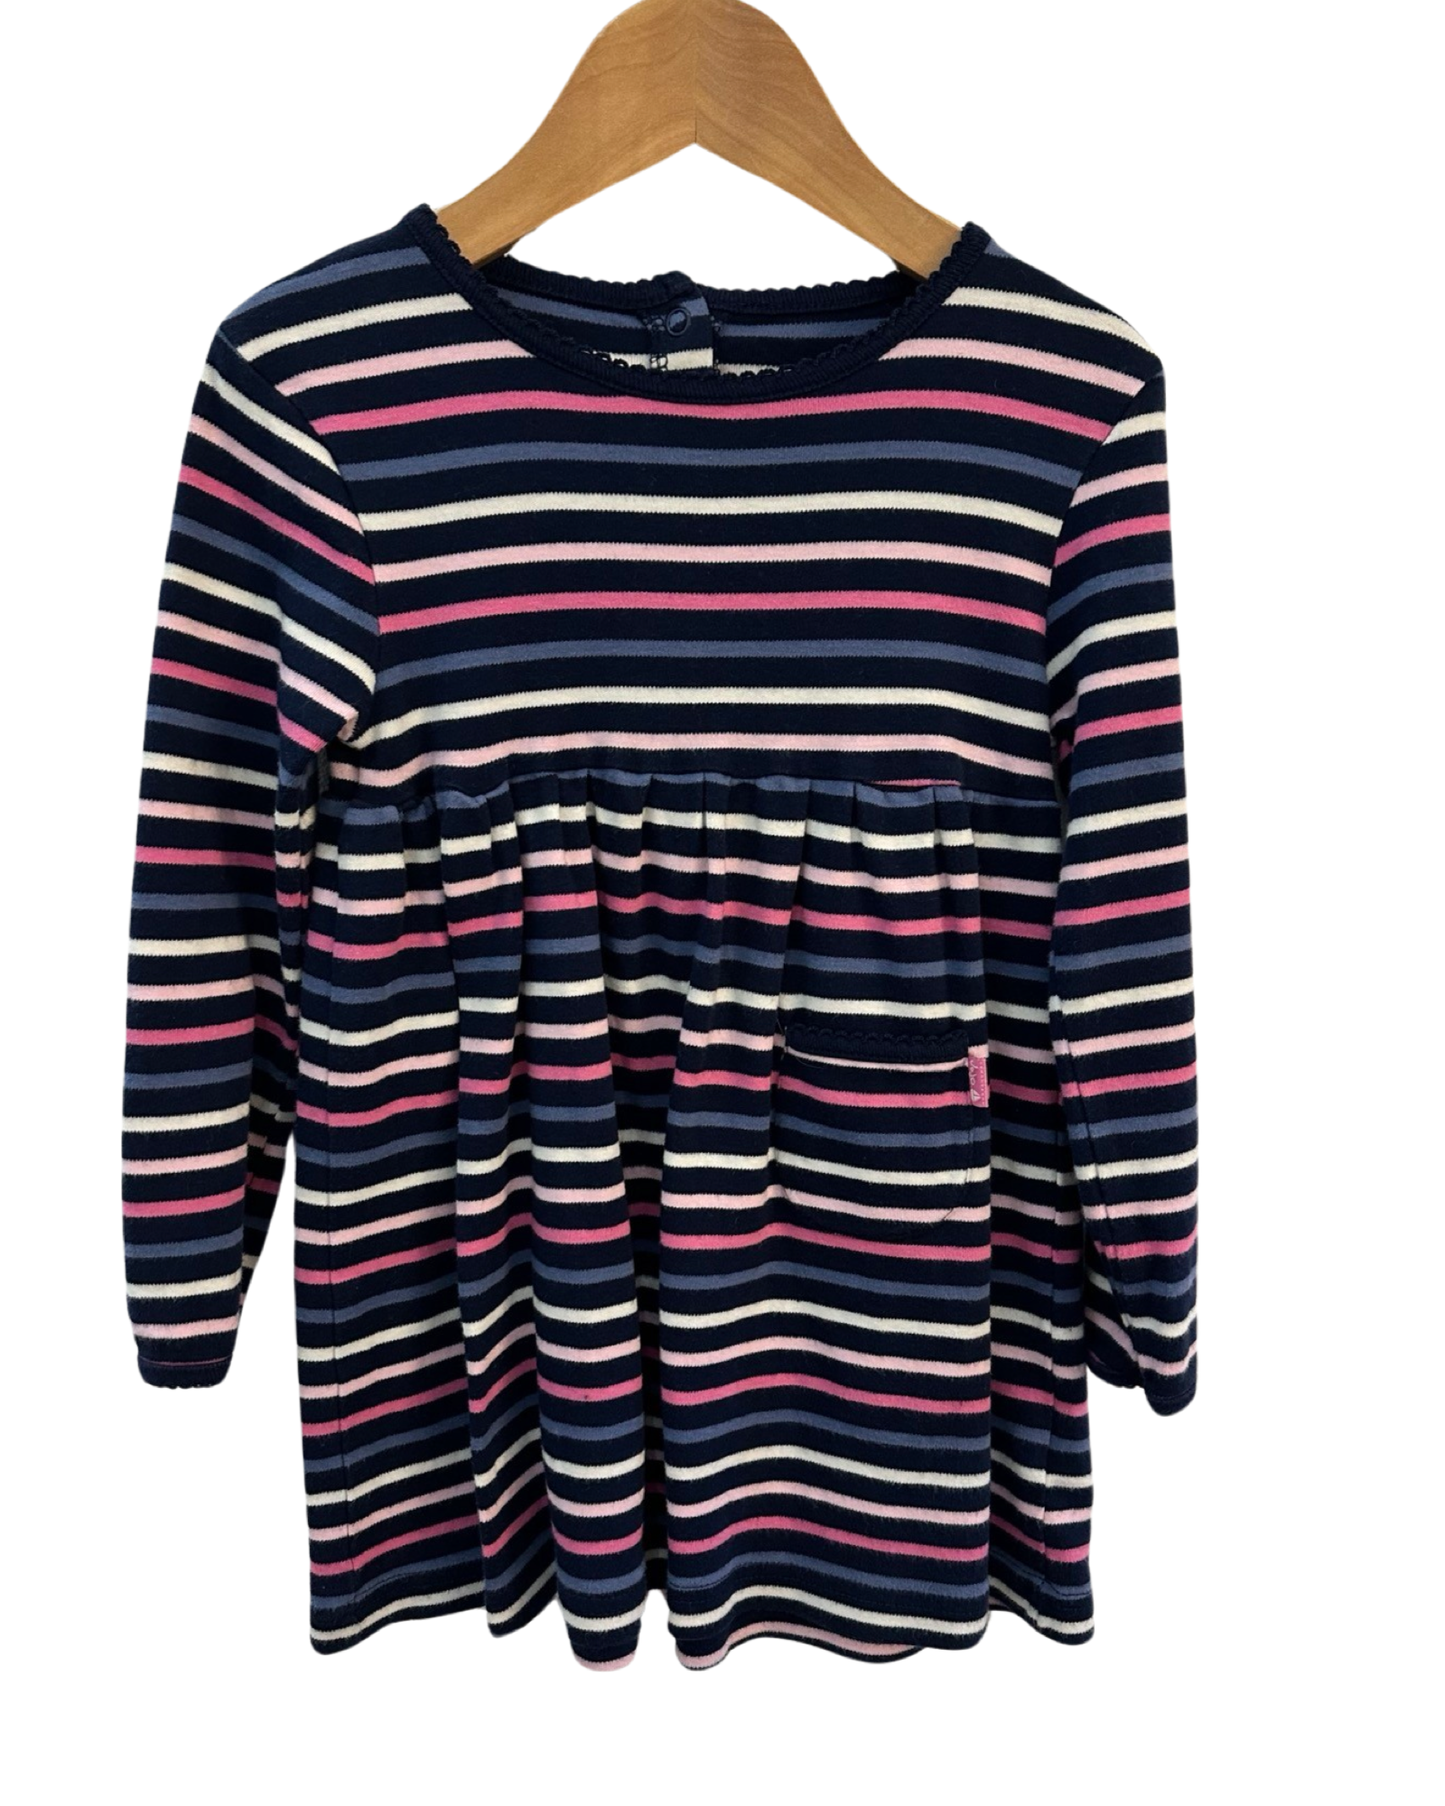 JoJo Maman Bebe jersey cotton striped dress (3-4yrs)